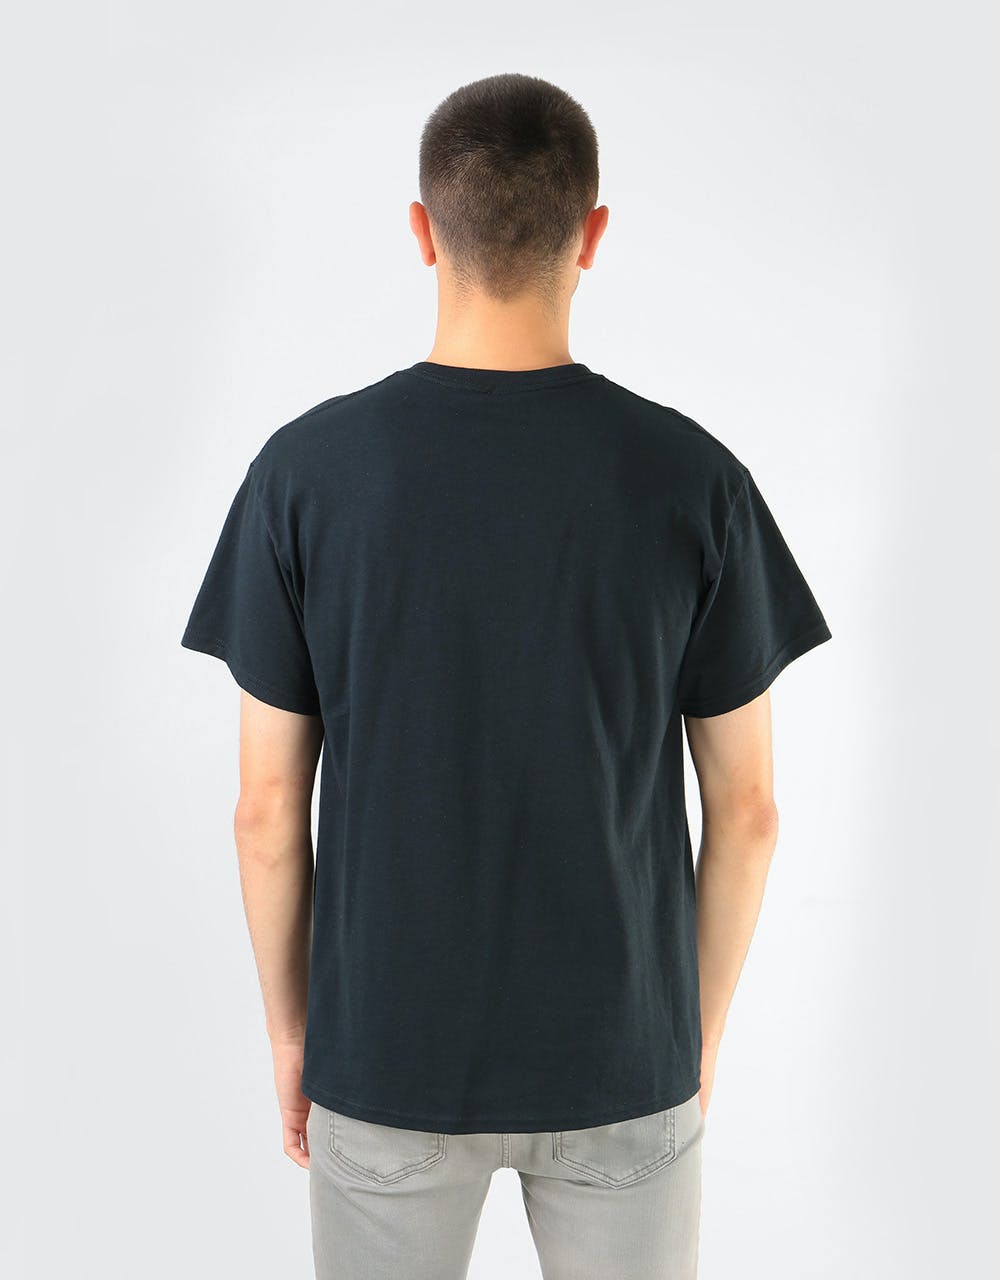 Thrasher Doubles T-Shirt - Black